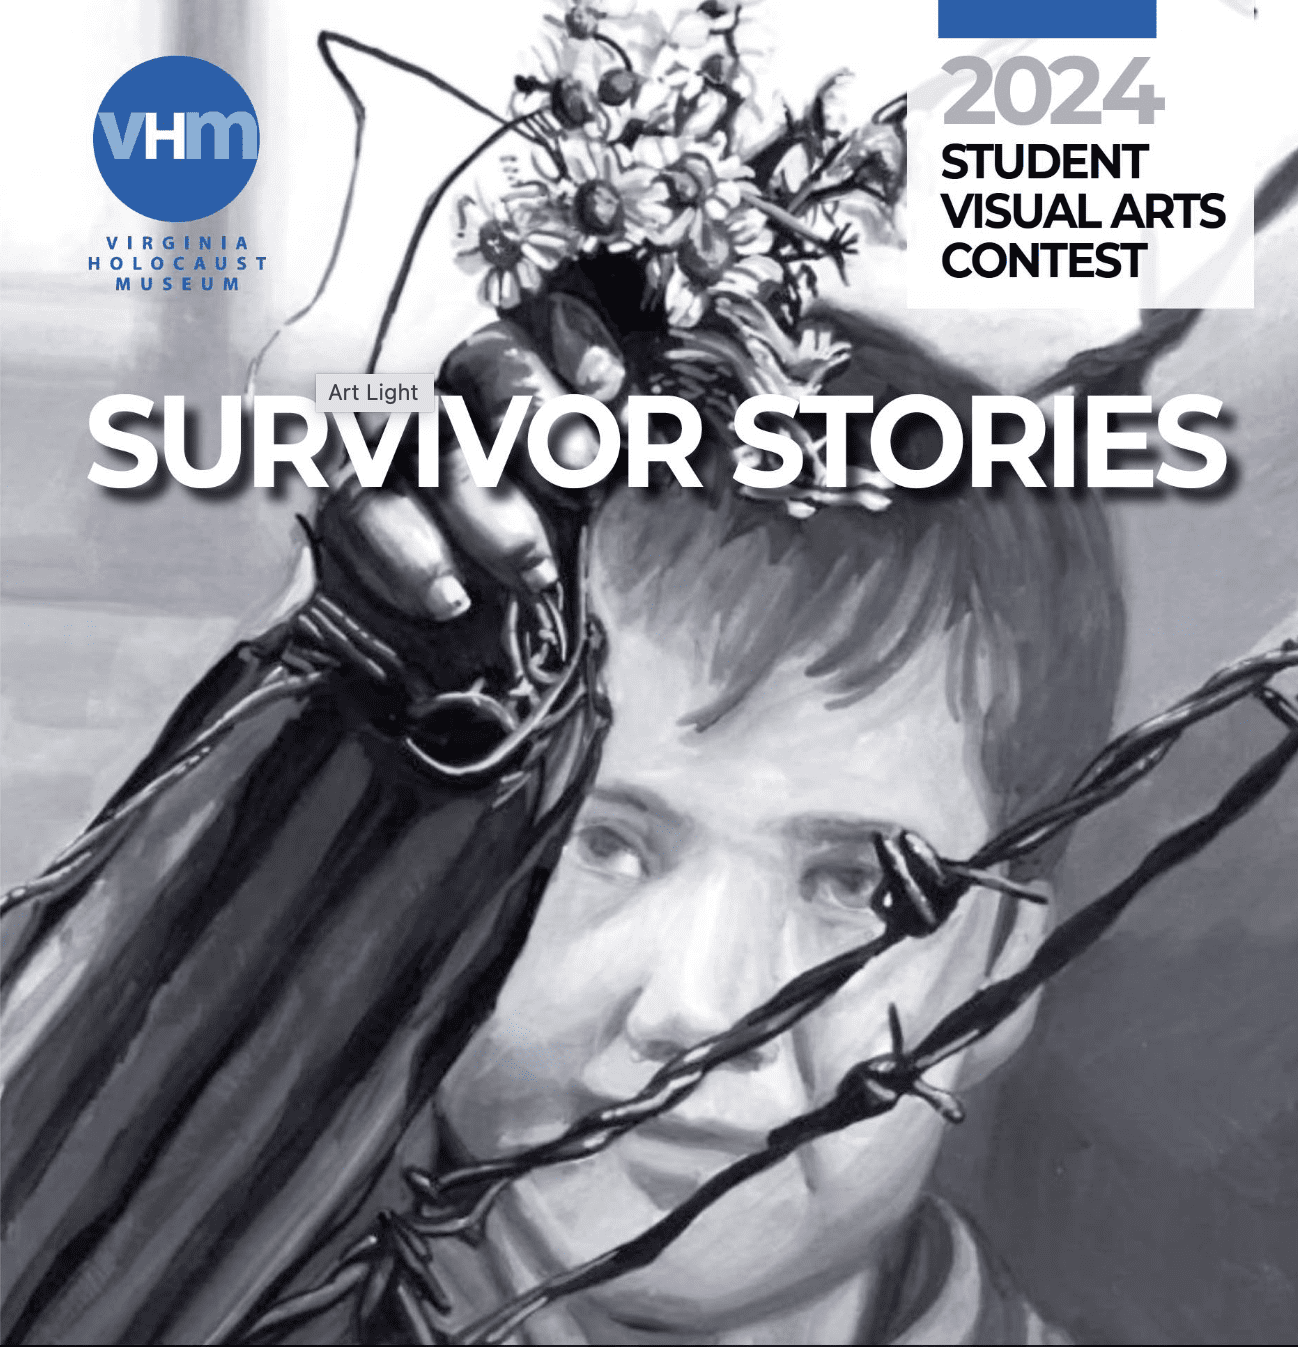 Student Visual Arts Contest Cover 2024 "Survivor Stories"